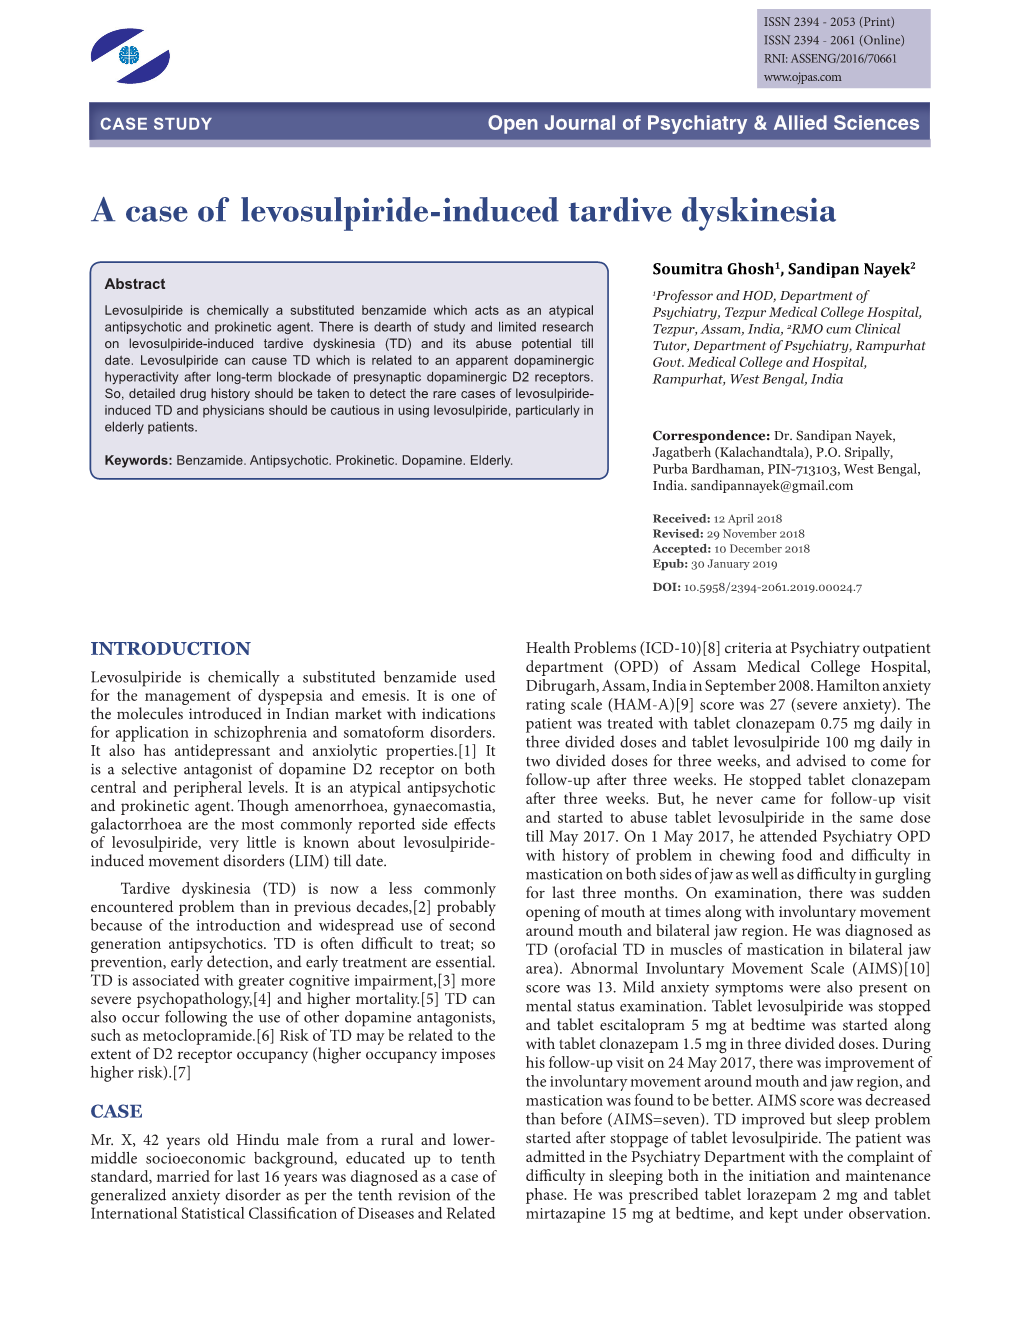 A Case of Levosulpiride-Induced Tardive Dyskinesia